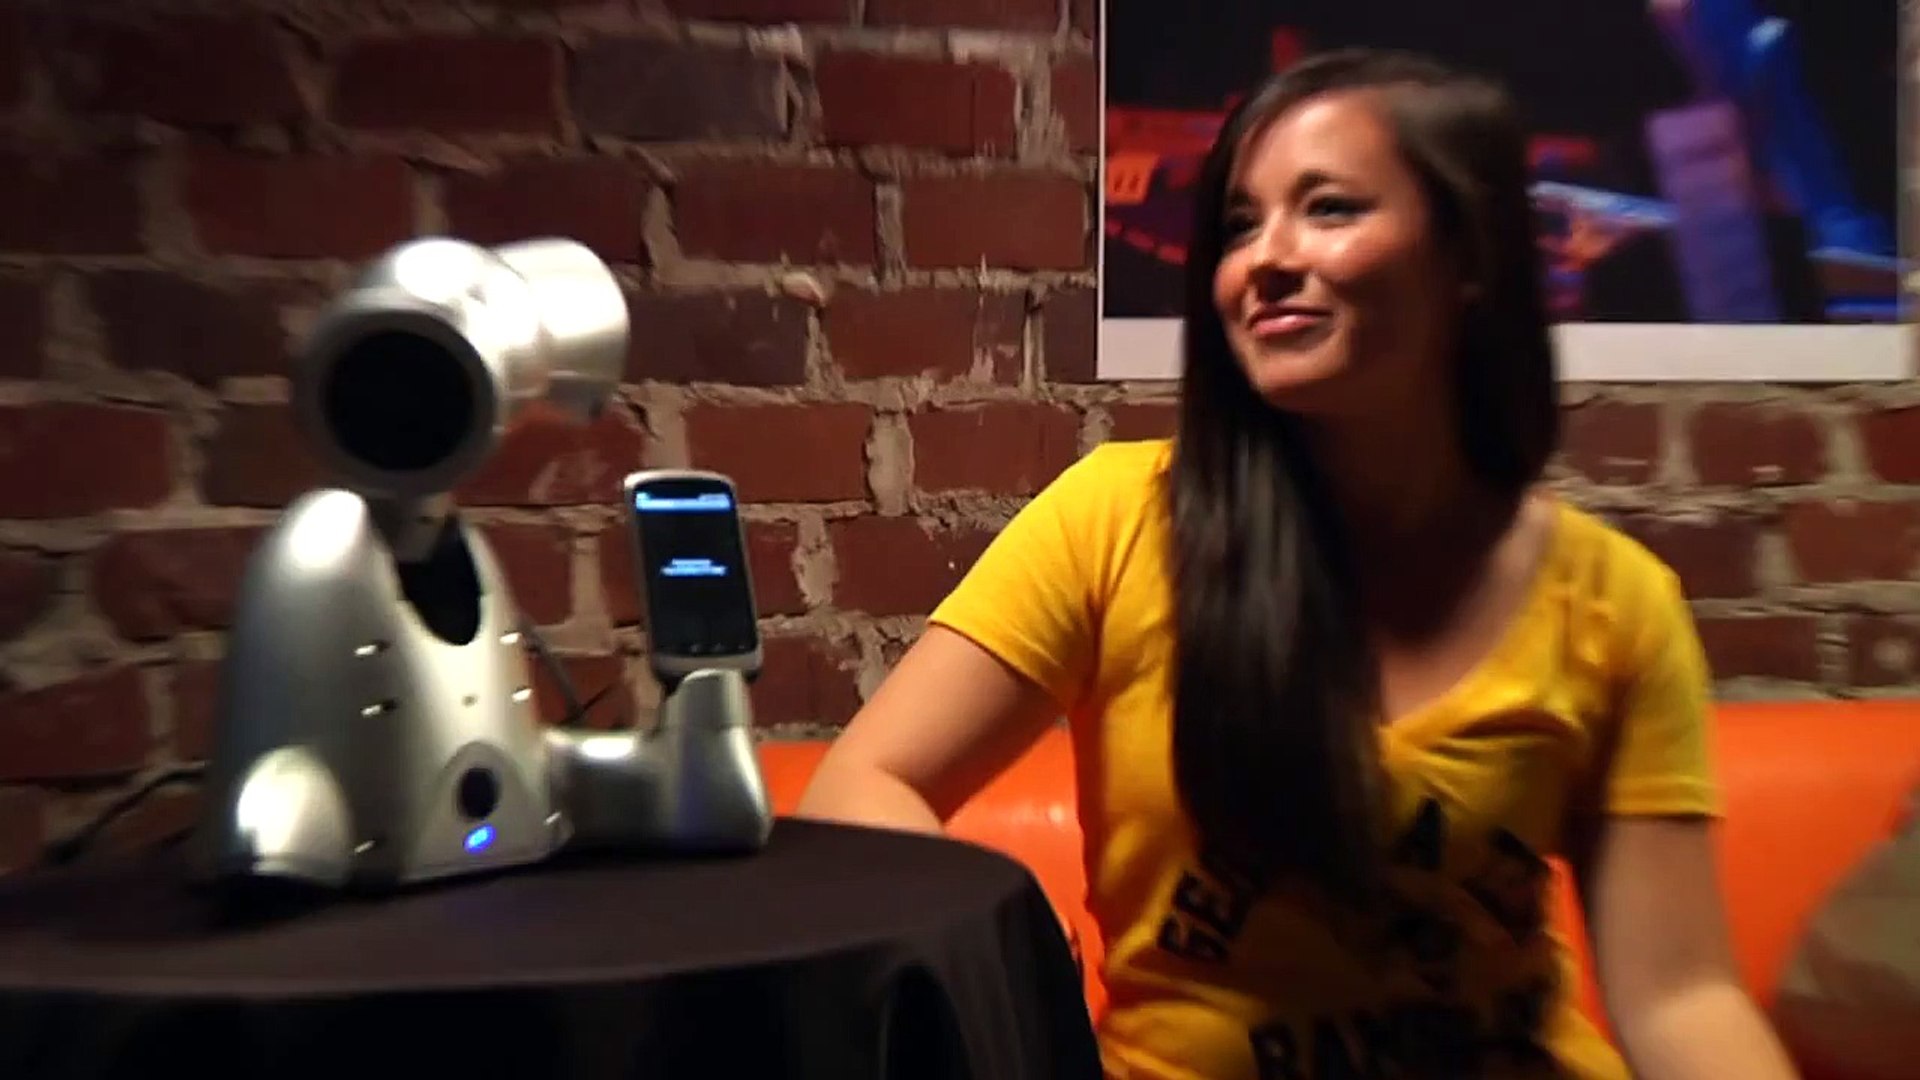 Travis - An Intelligent Robotic Music Companion